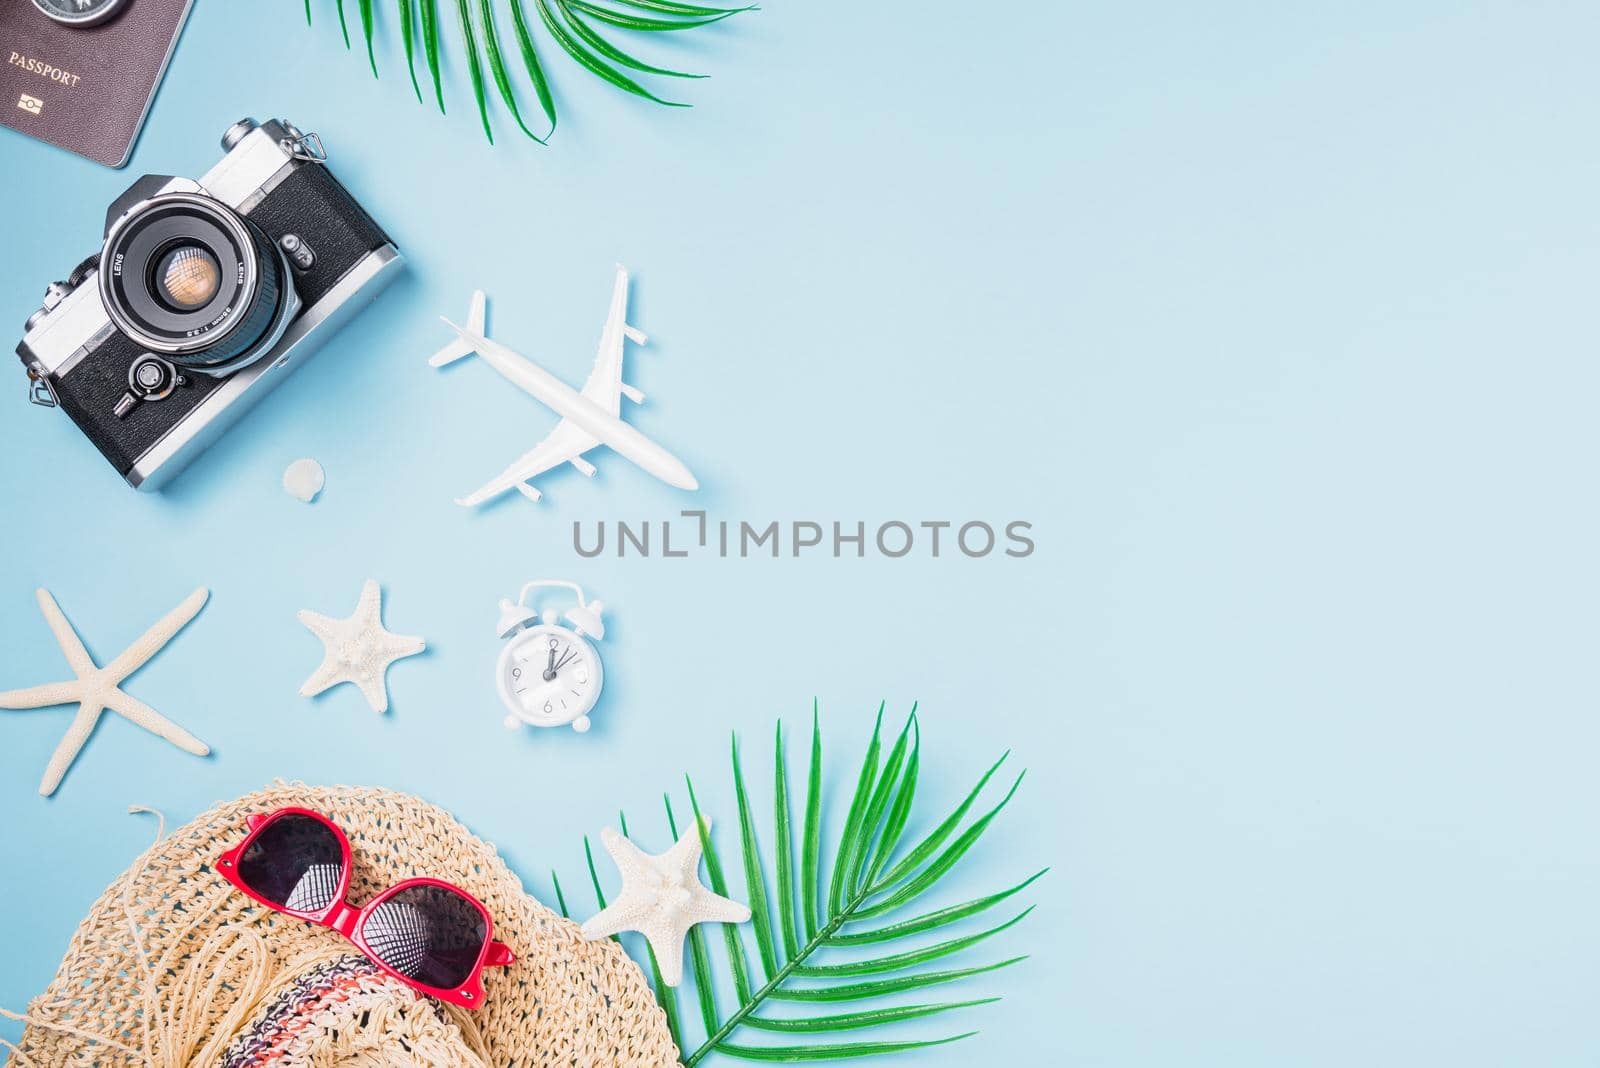 camera films, airplane, starfish, shells, hat traveler tropical accessories by Sorapop